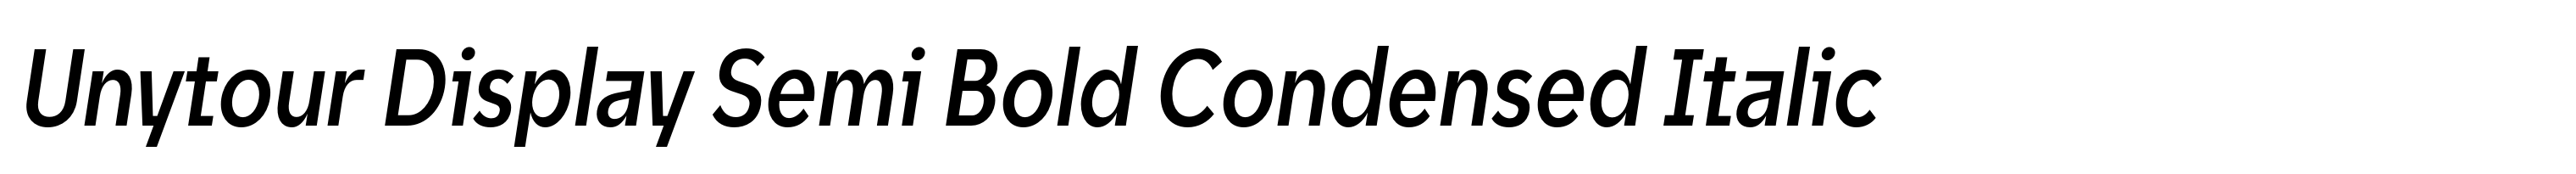 Unytour Display Semi Bold Condensed Italic